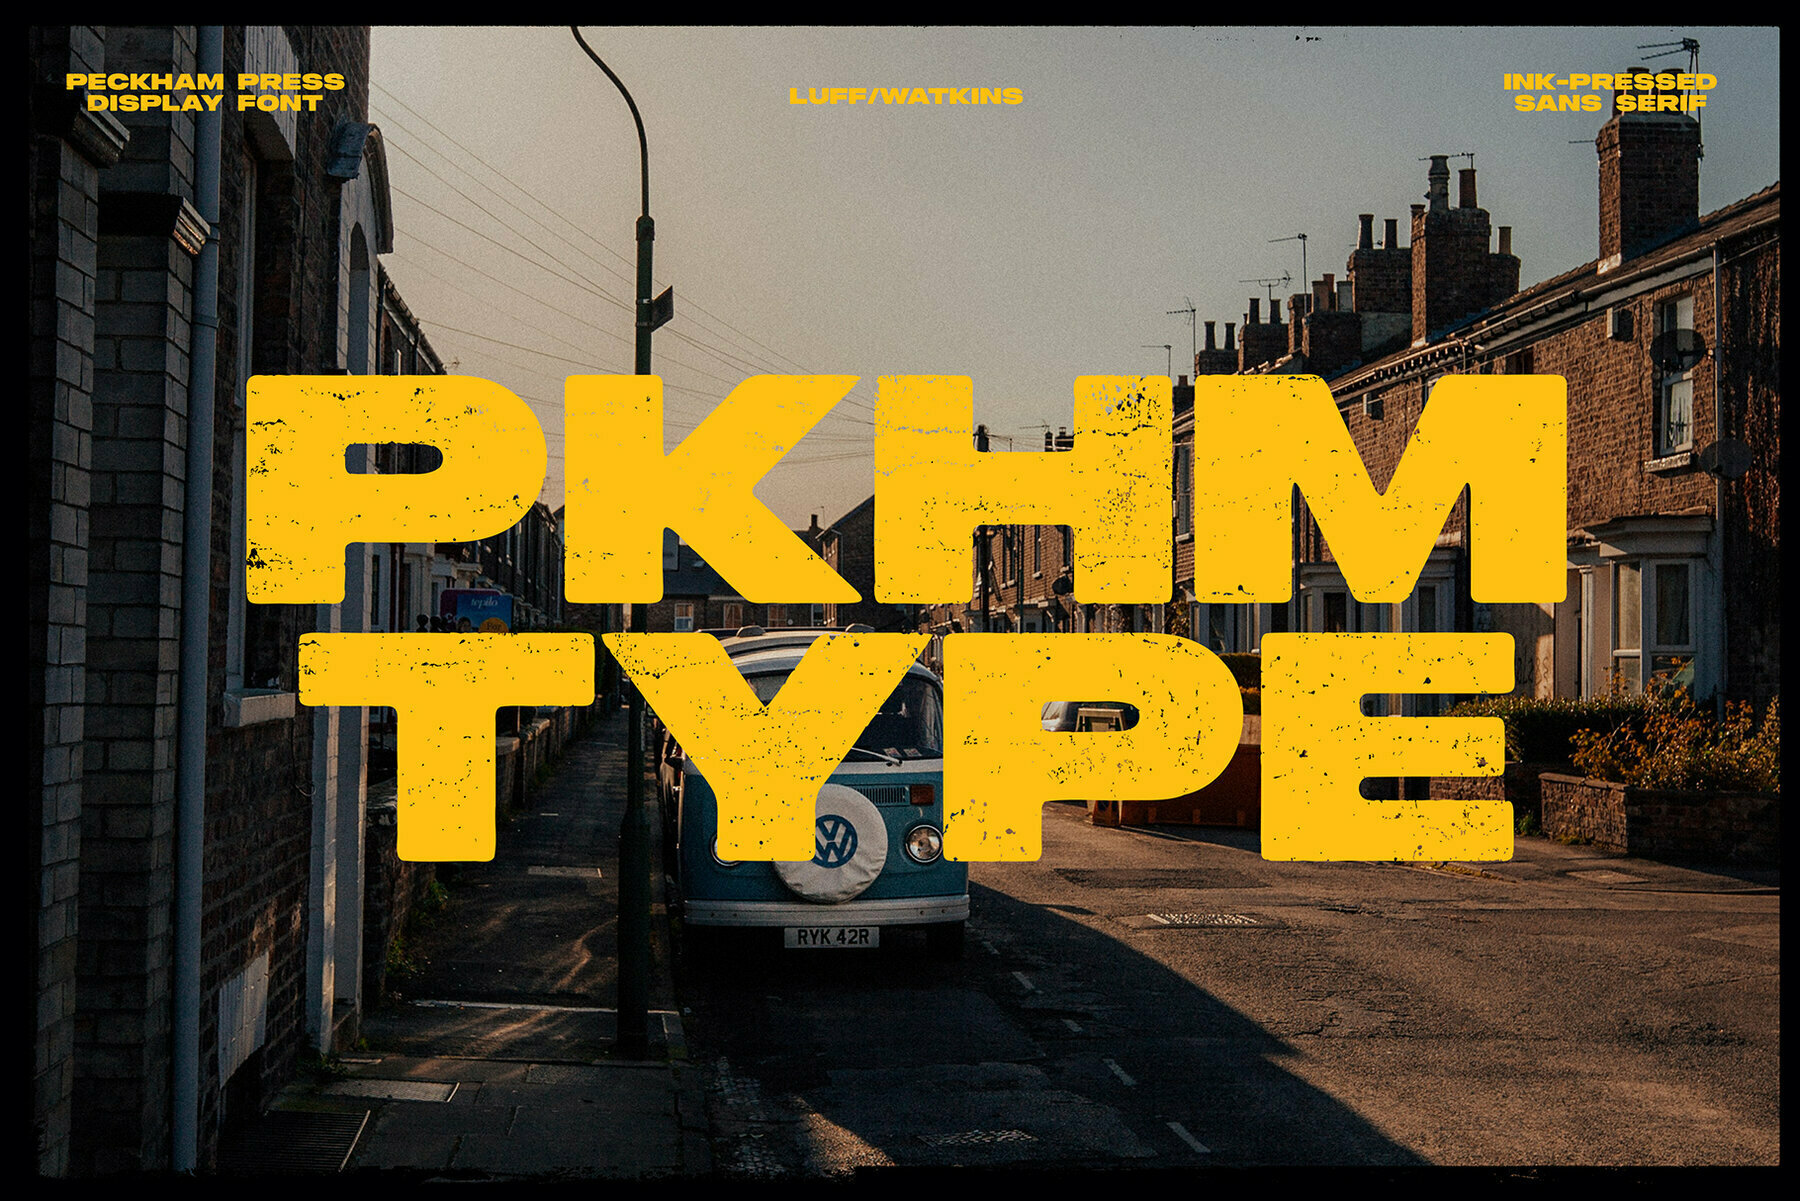 Peckham Press Font